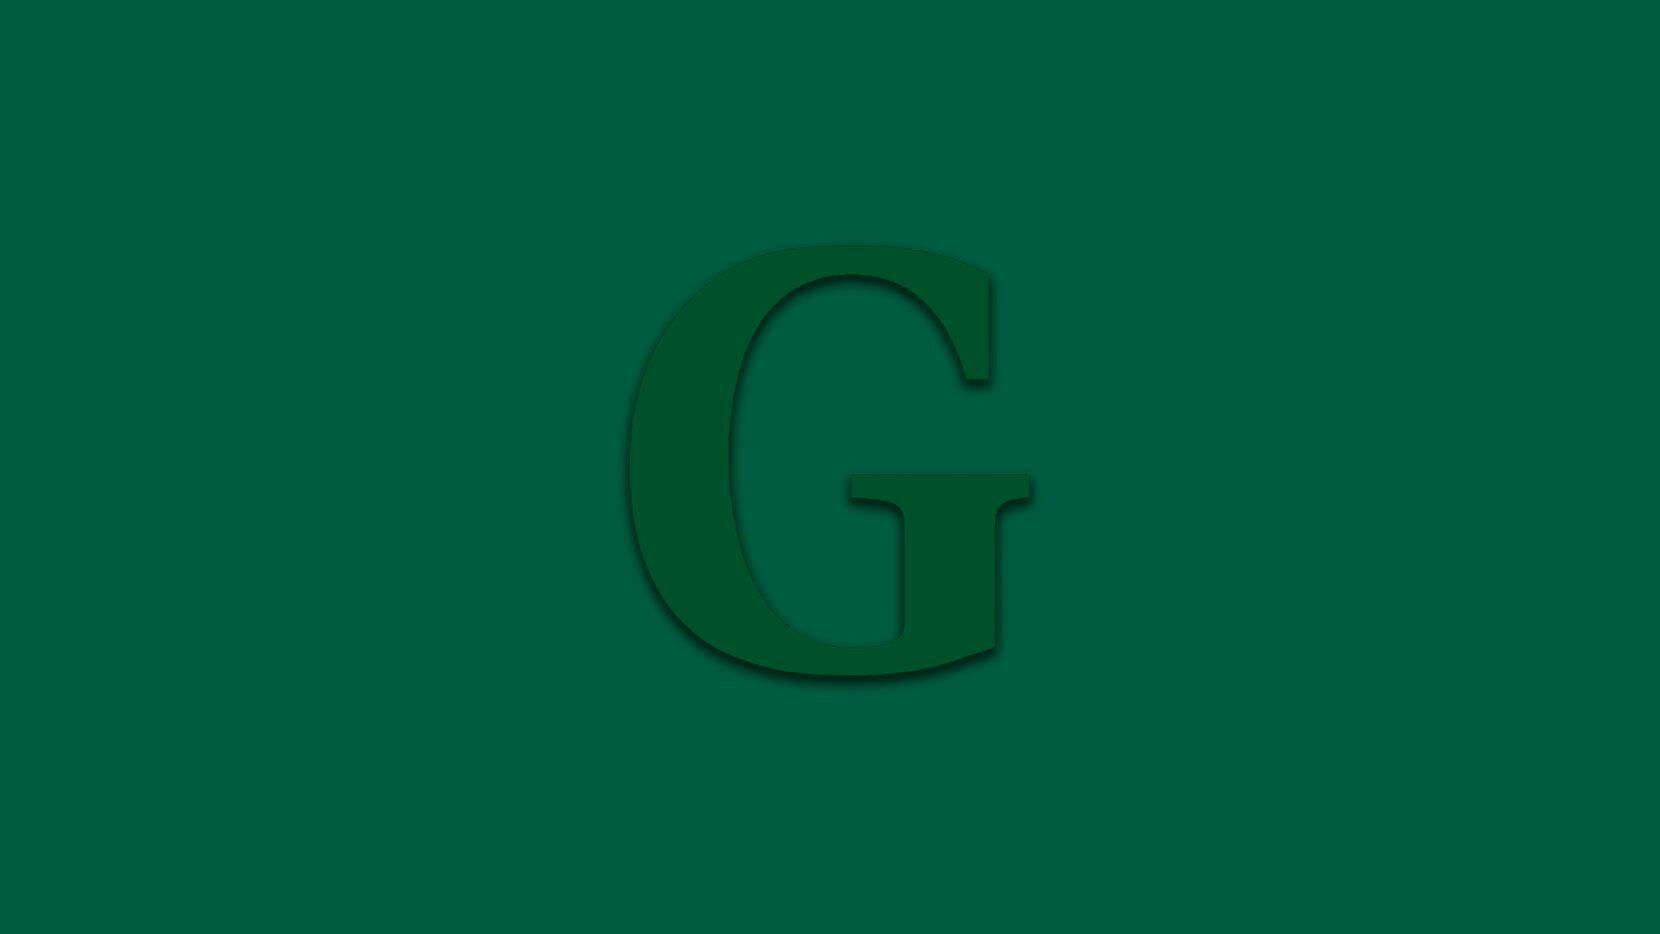 Greenhill logo.